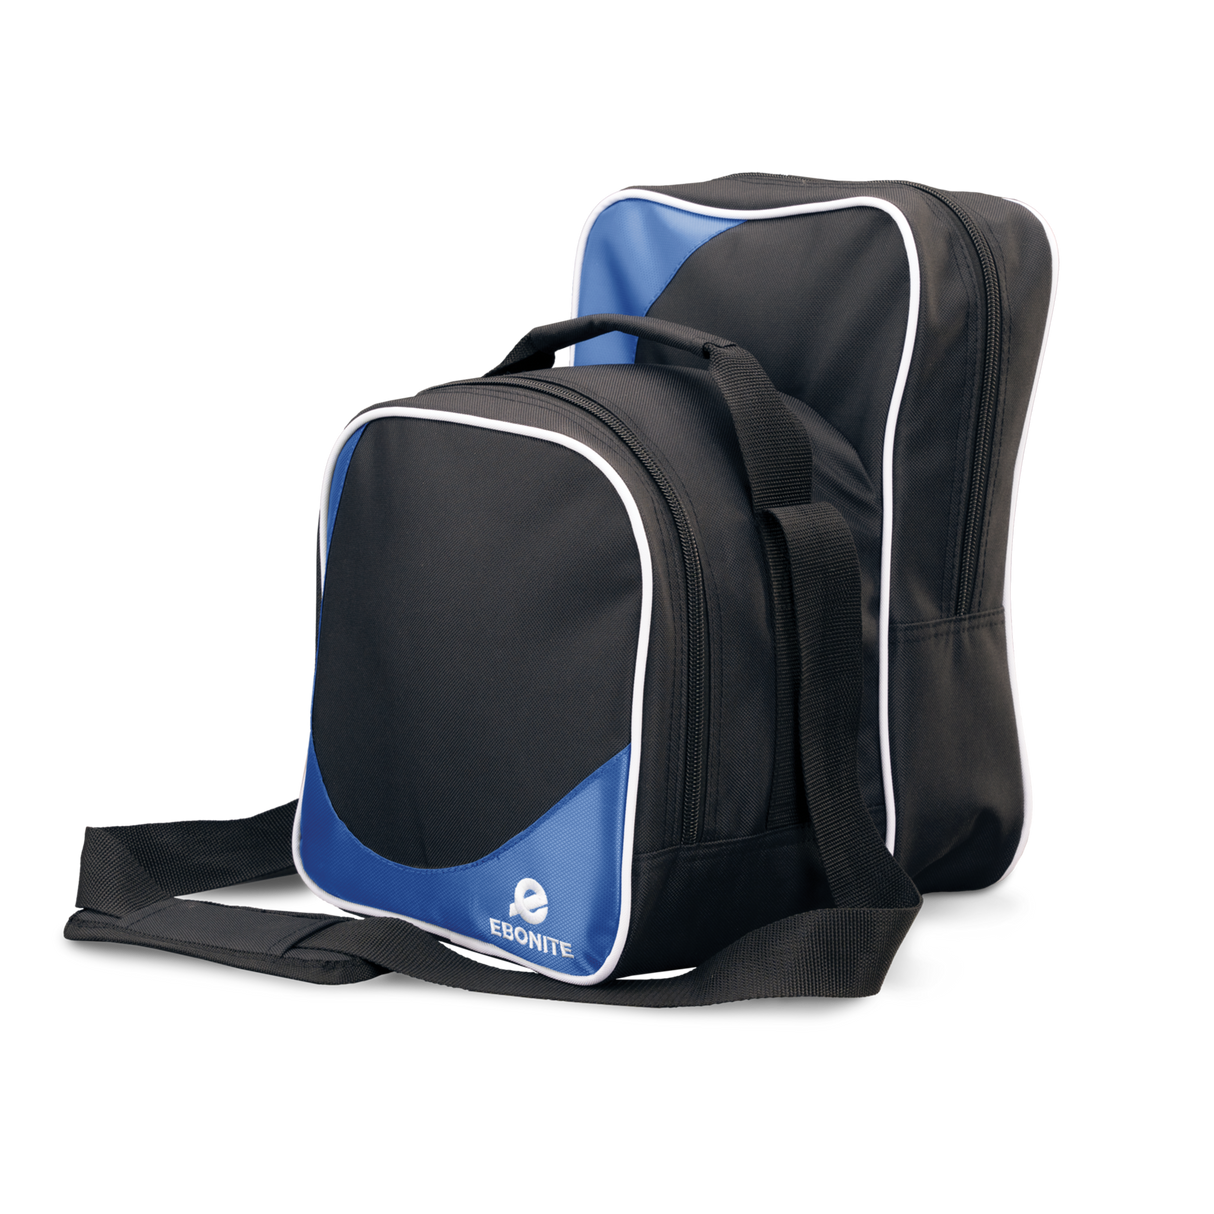 shoulder bowling bag with shoe carry on travel ebonite